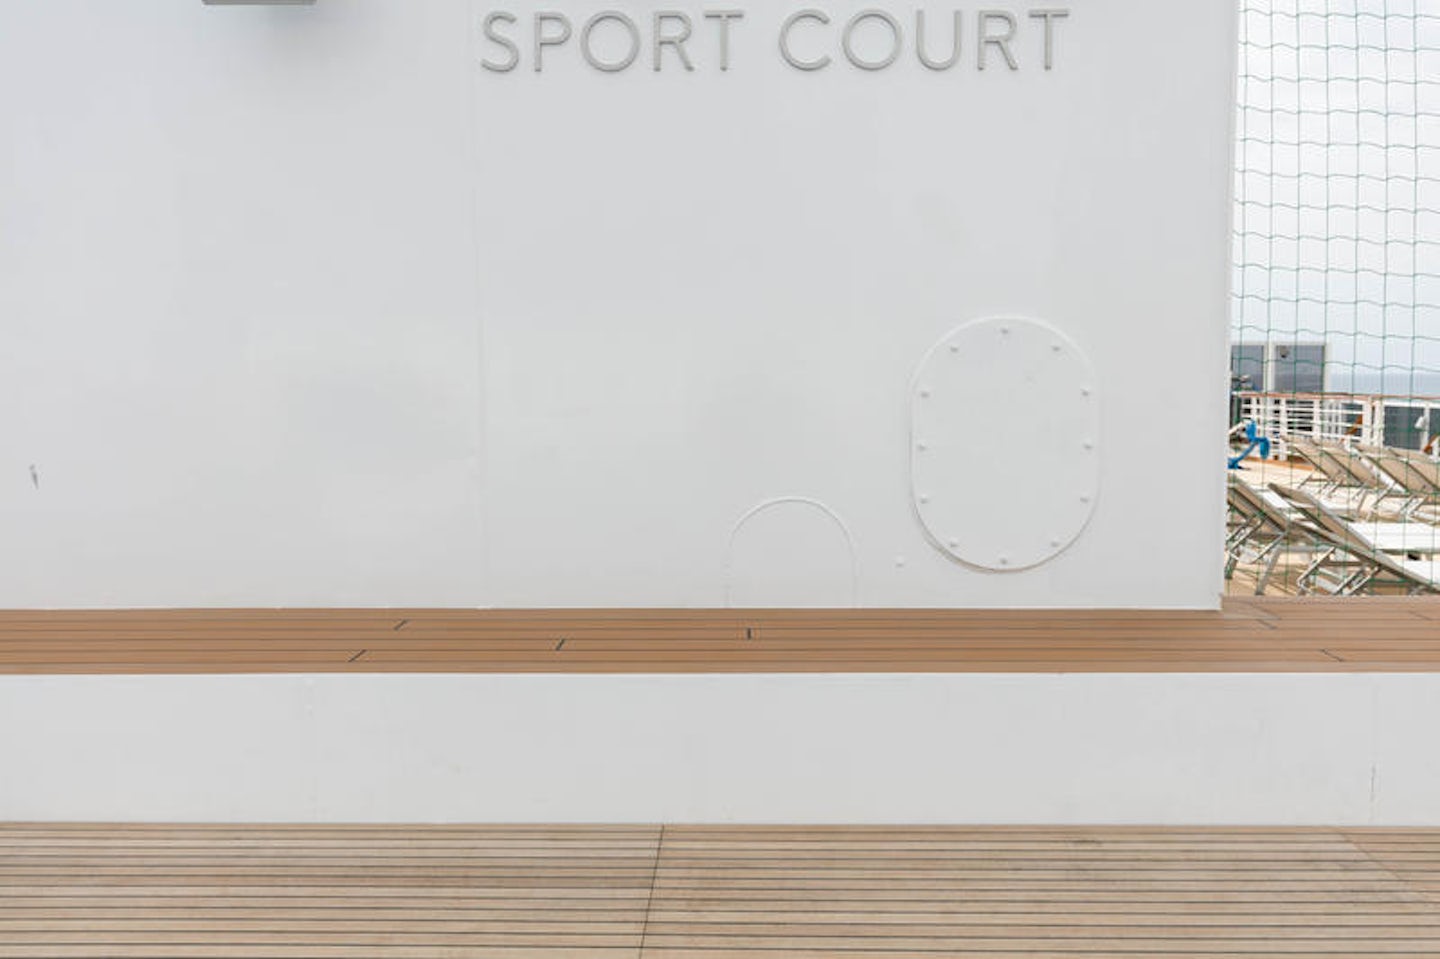 Sports Court on Koningsdam